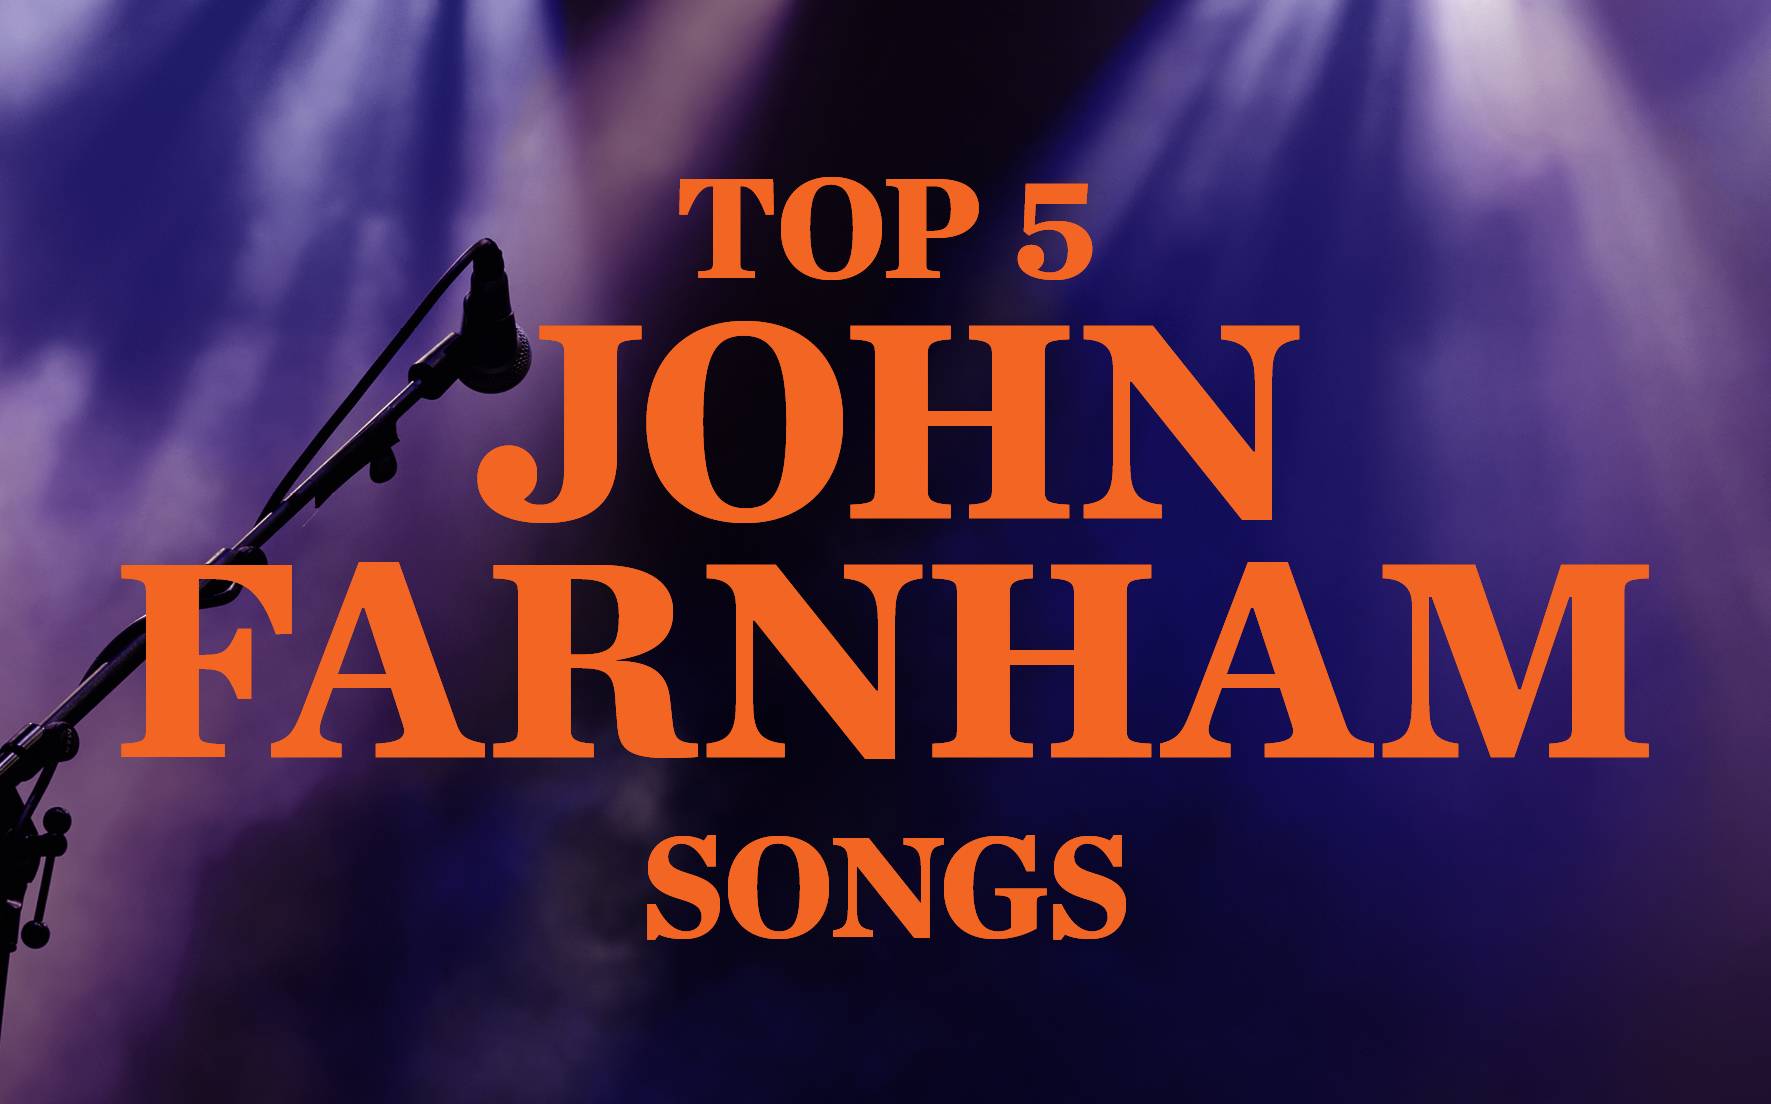 Top 5 John Farnham Songs